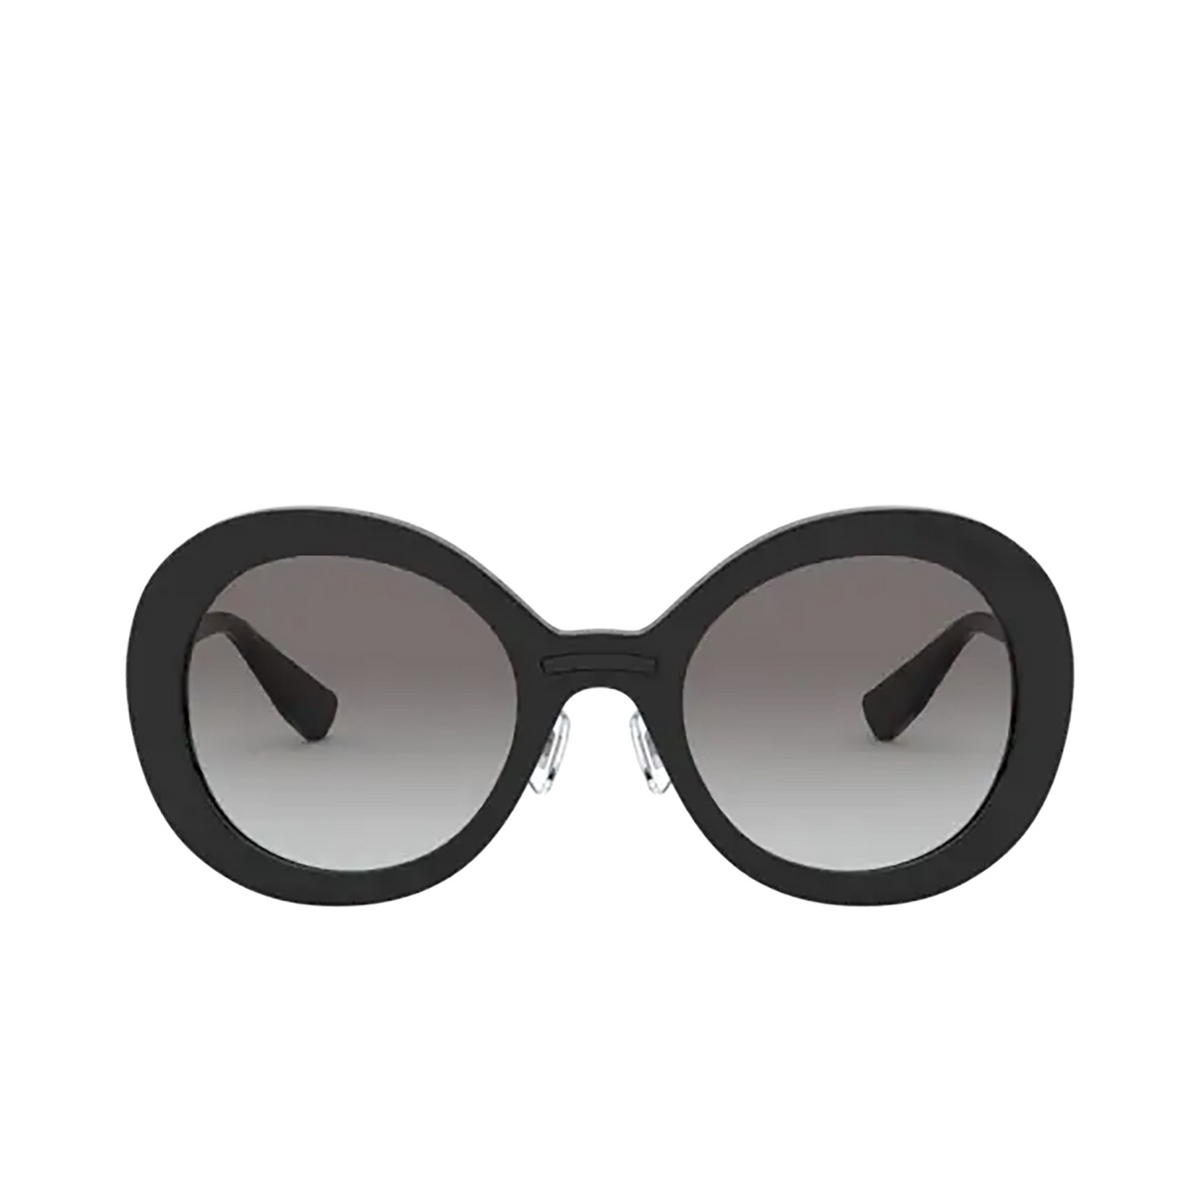 Miu Miu® Round Sunglasses: MU 04VS color Black 1AB0A7 - front view.